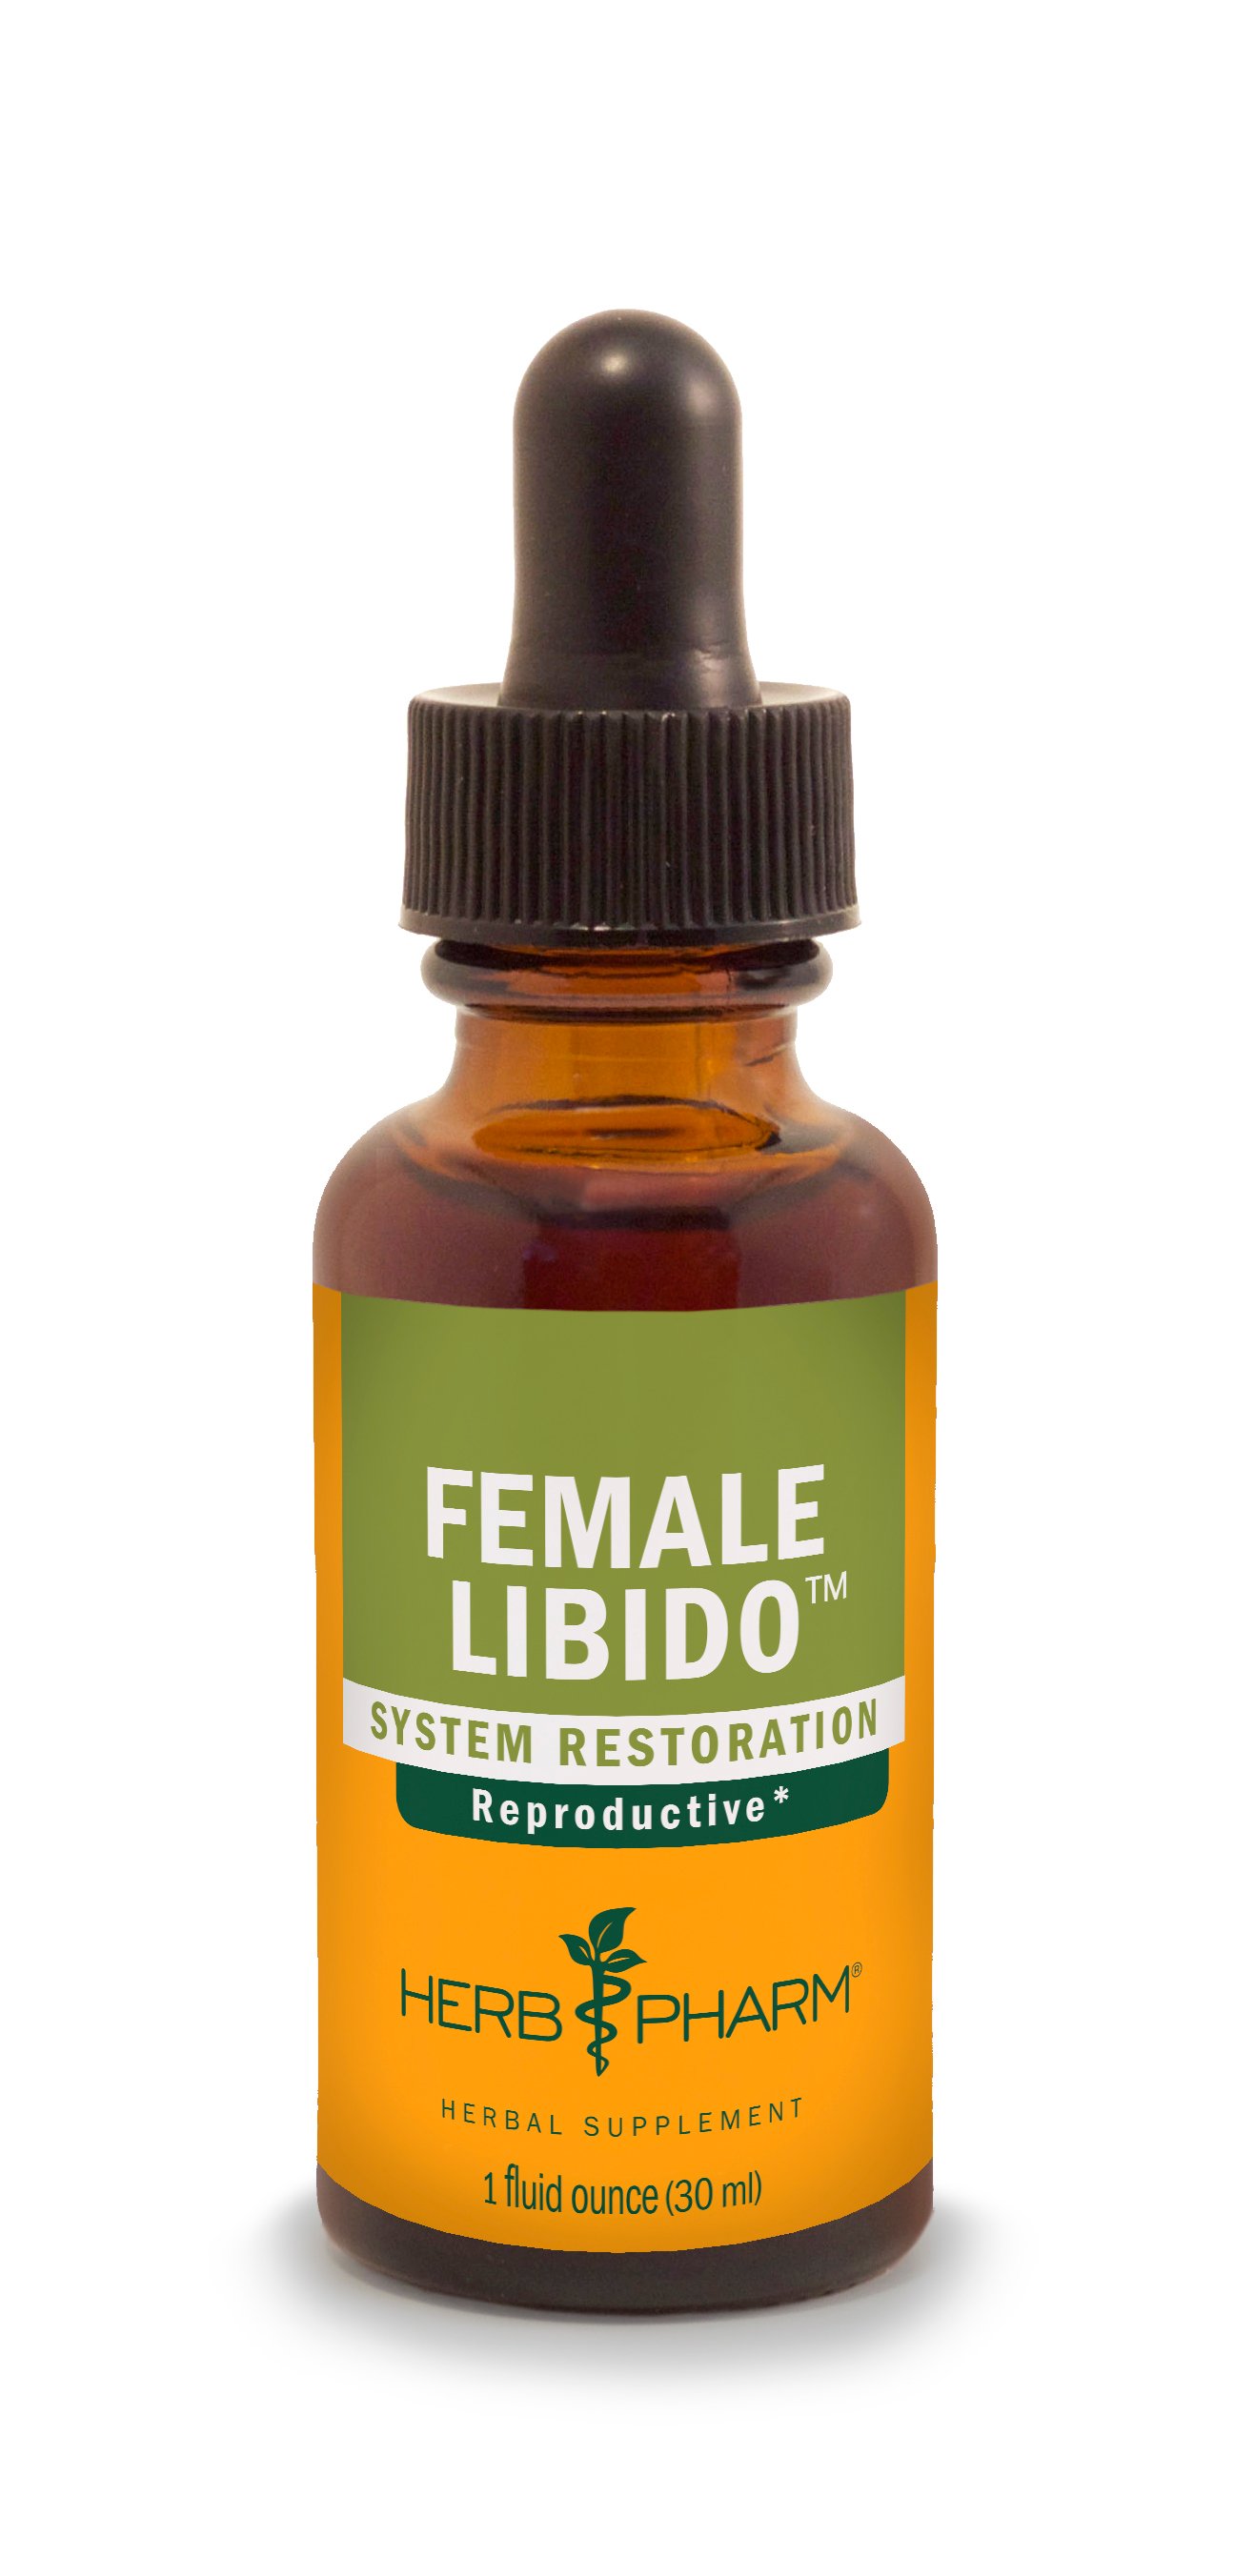 Herb Pharm Female Libido Herbal Supplement Shop Herbs And Homeopathy At H E B